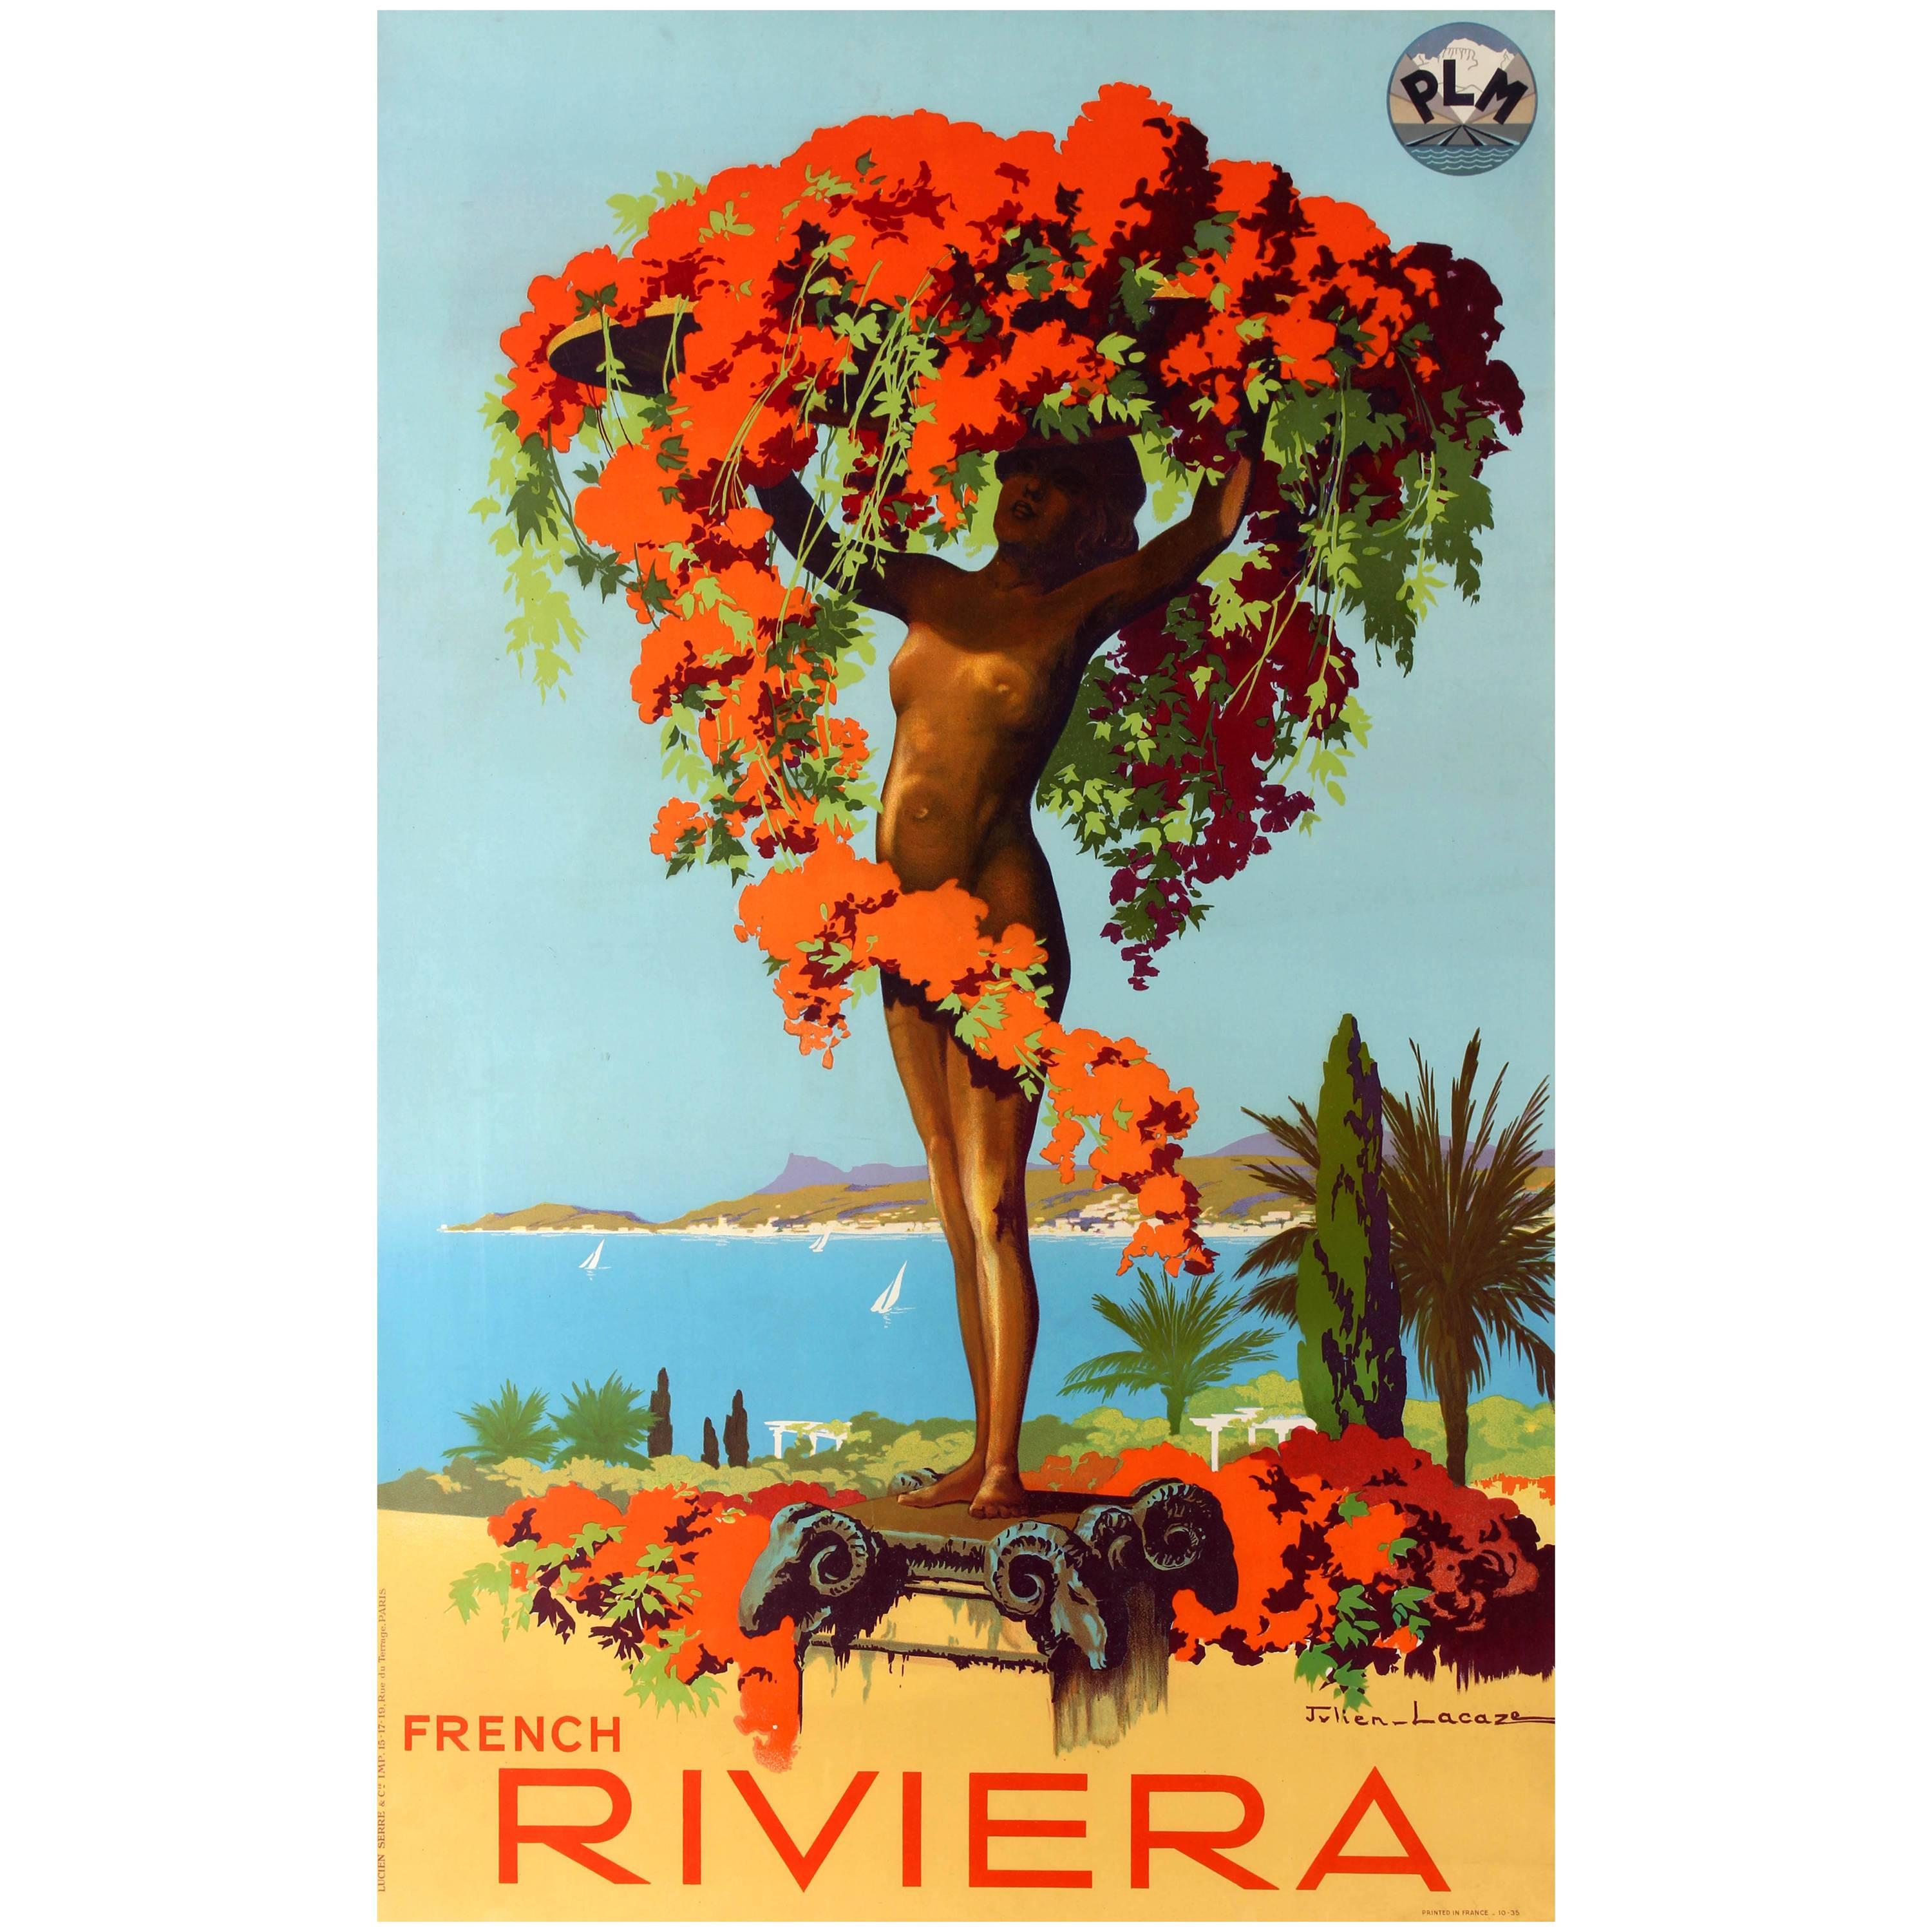 Paris Lyon Mediterrane Cannes France French Vintage Travel Advertisement Poster 